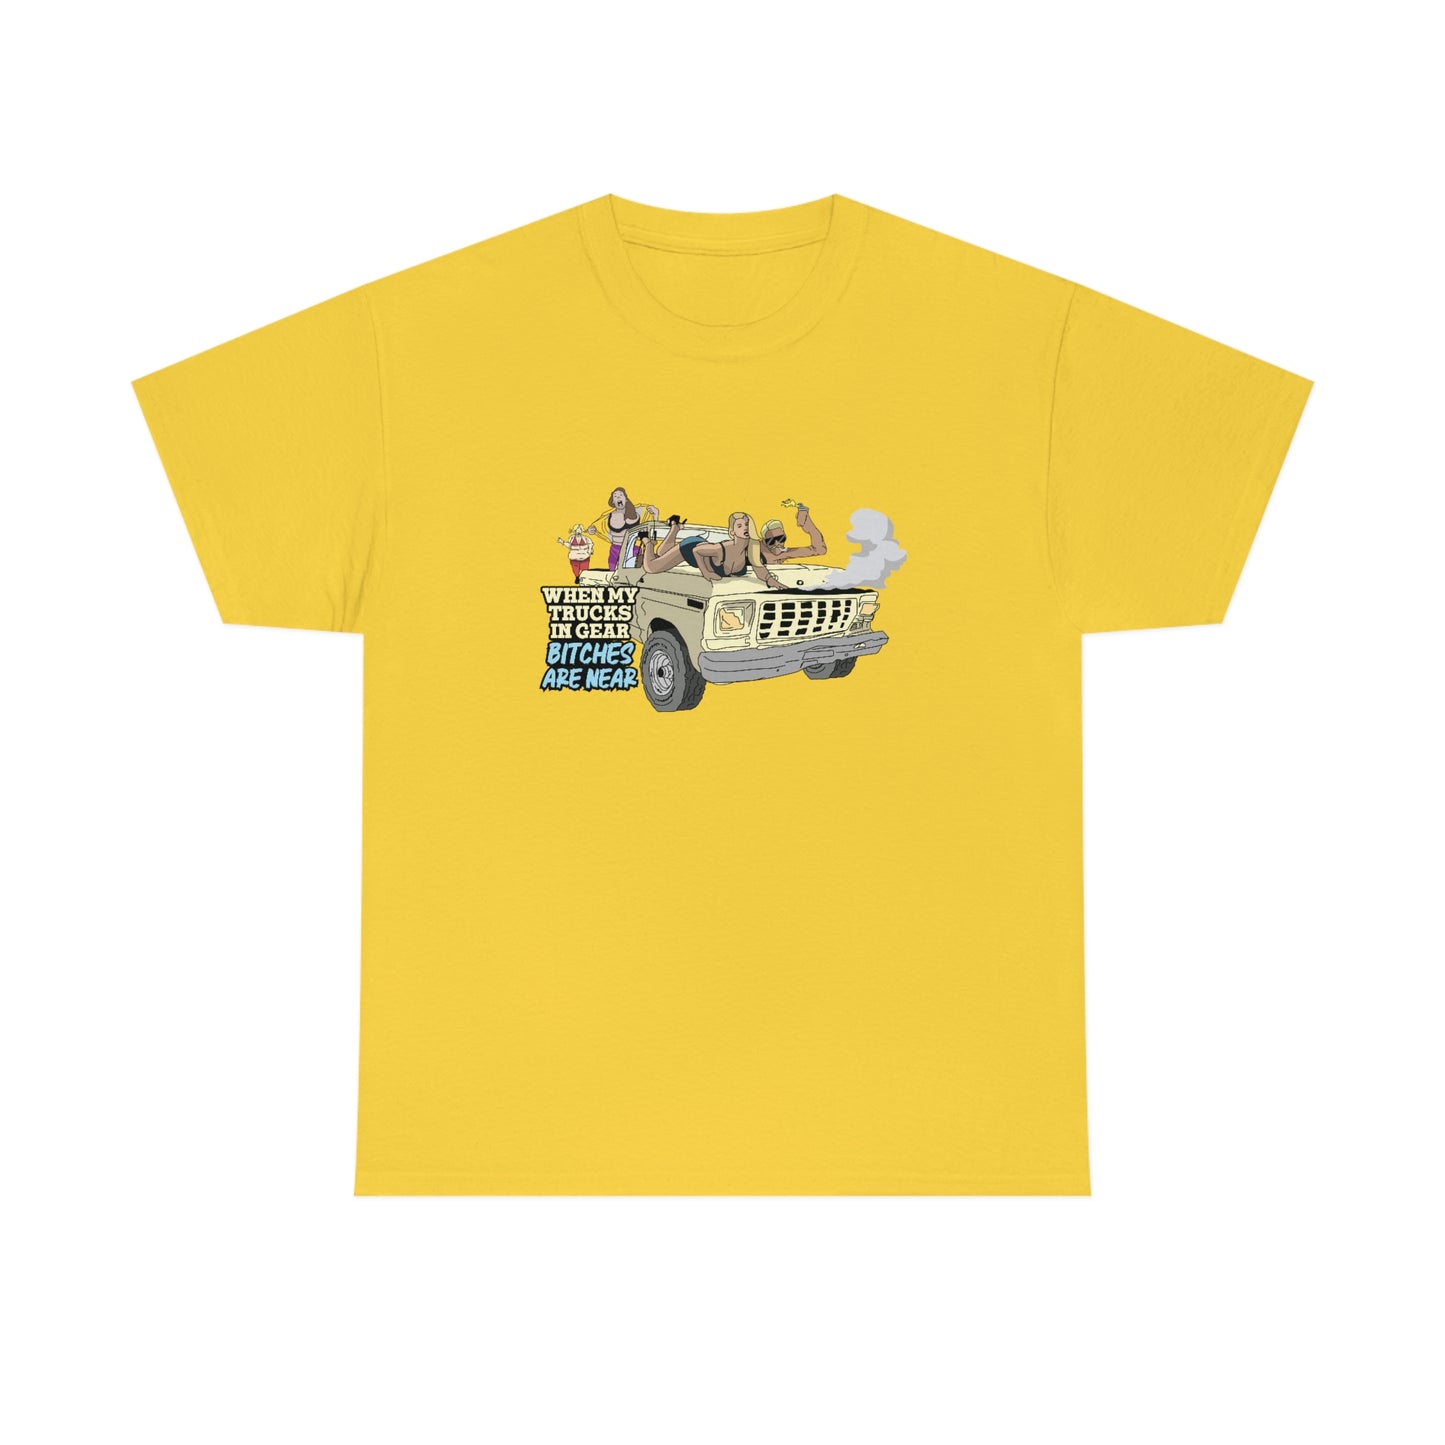 Trucks In Gear Bitches Are Near T-Shirt